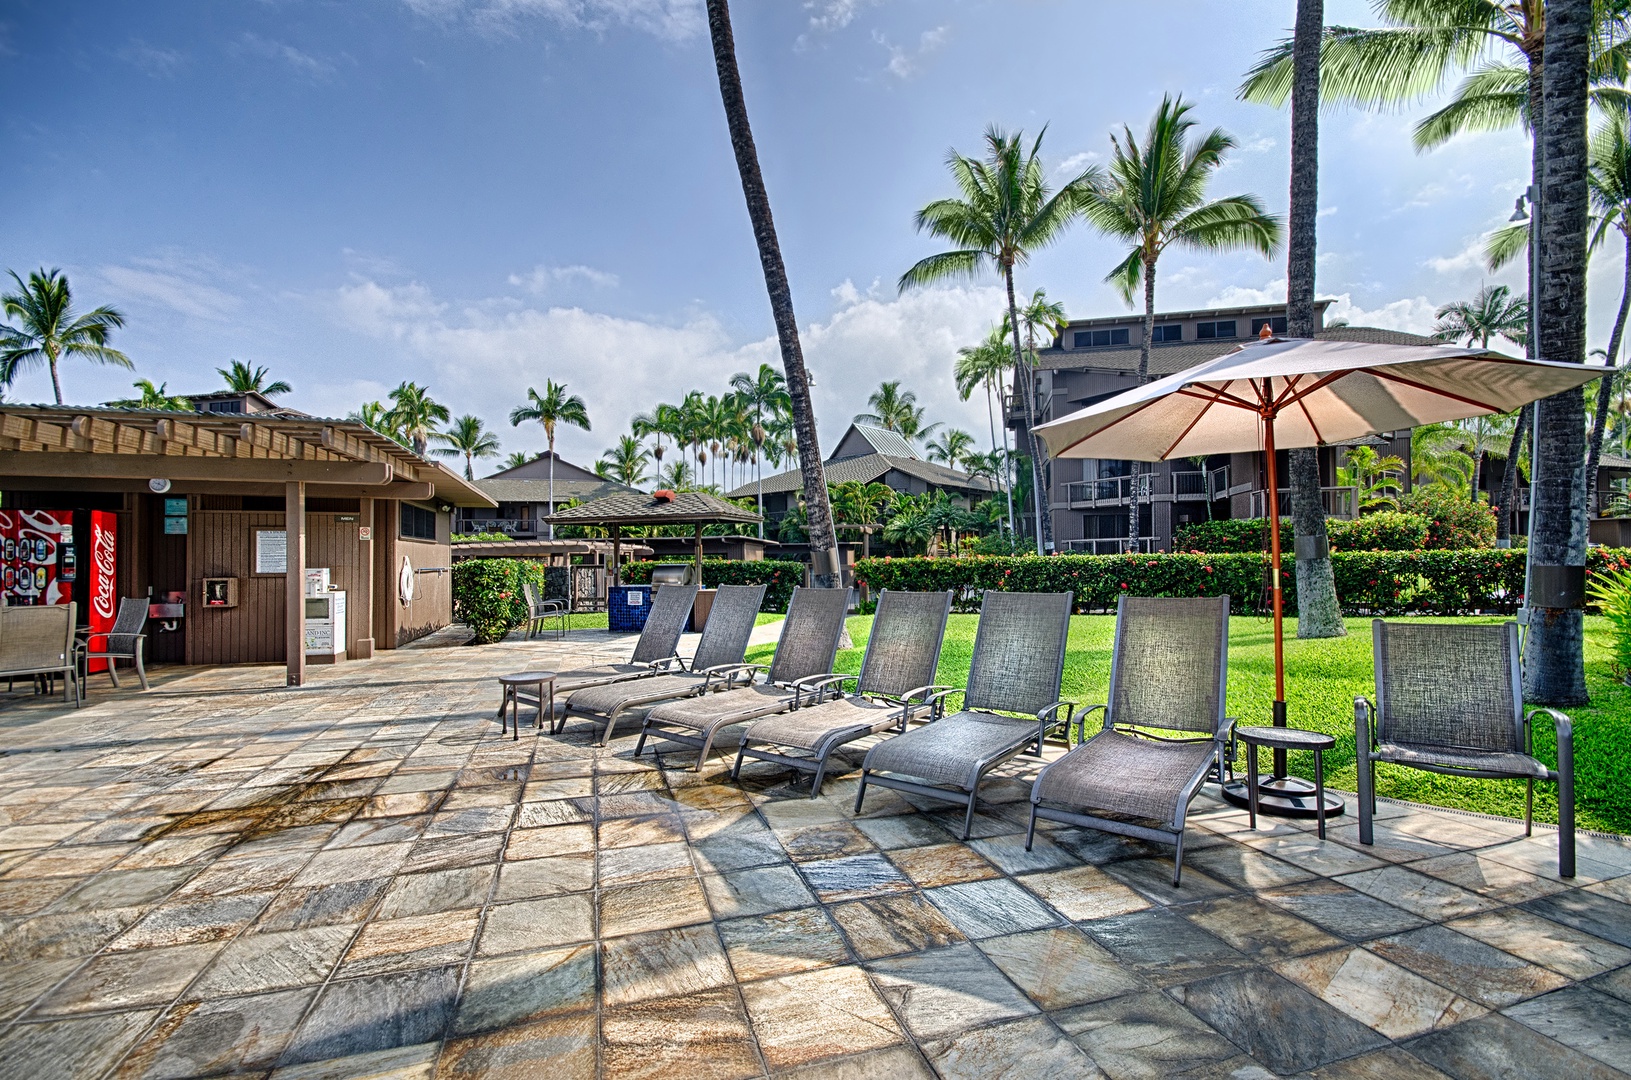 Kailua Kona Vacation Rentals, Kanaloa at Kona 701 - Pool area with sun beds